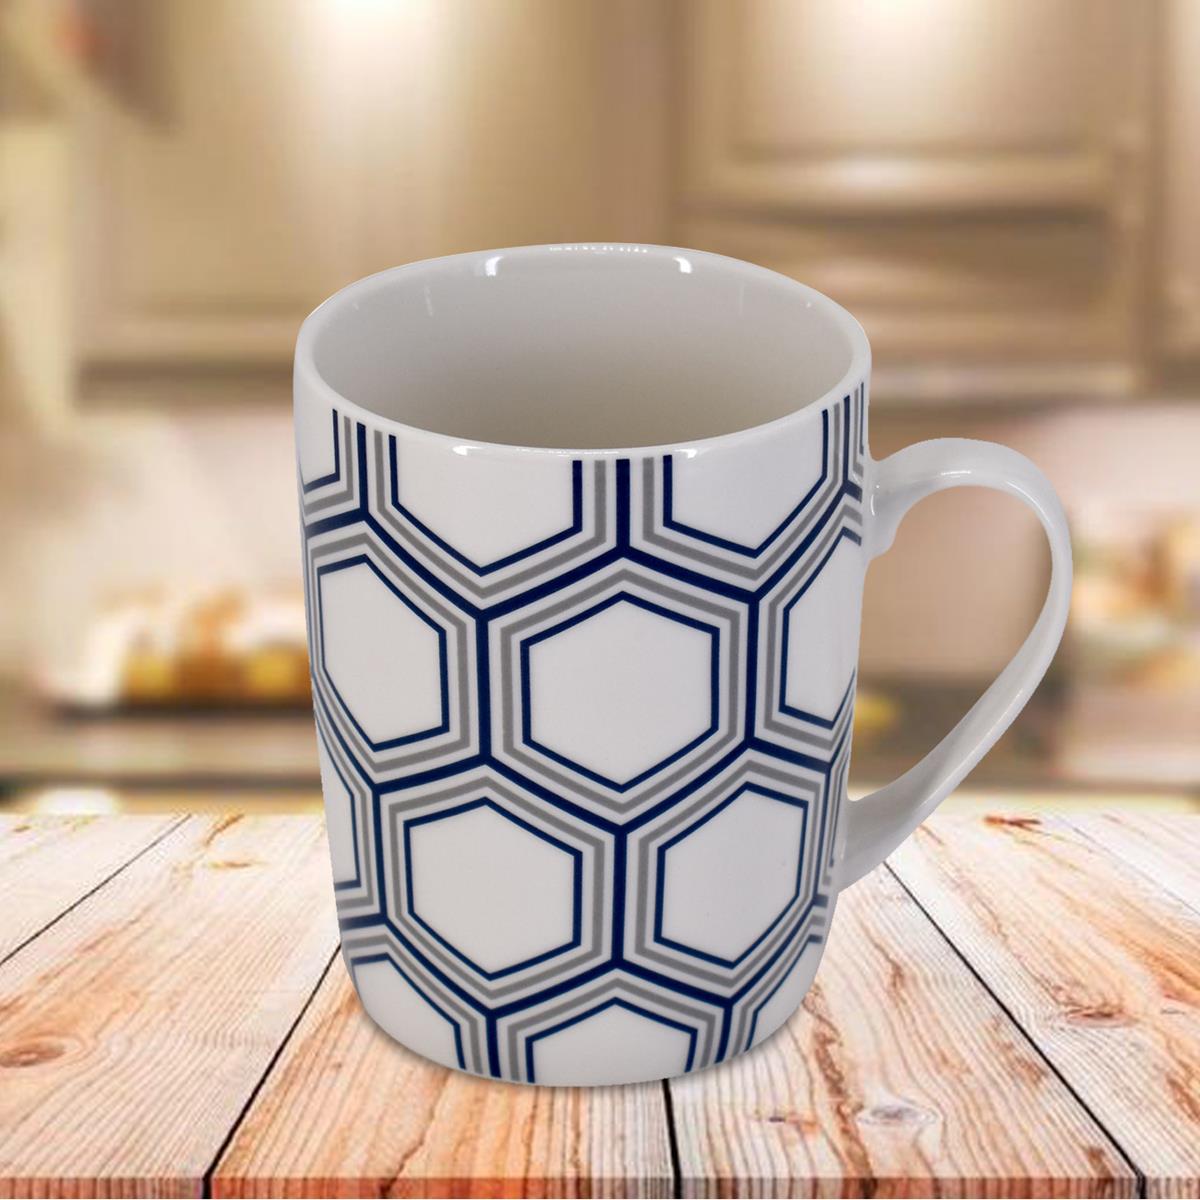 Printed Ceramic Tall Coffee or Tea Mug with handle - 325ml (R4970-C)